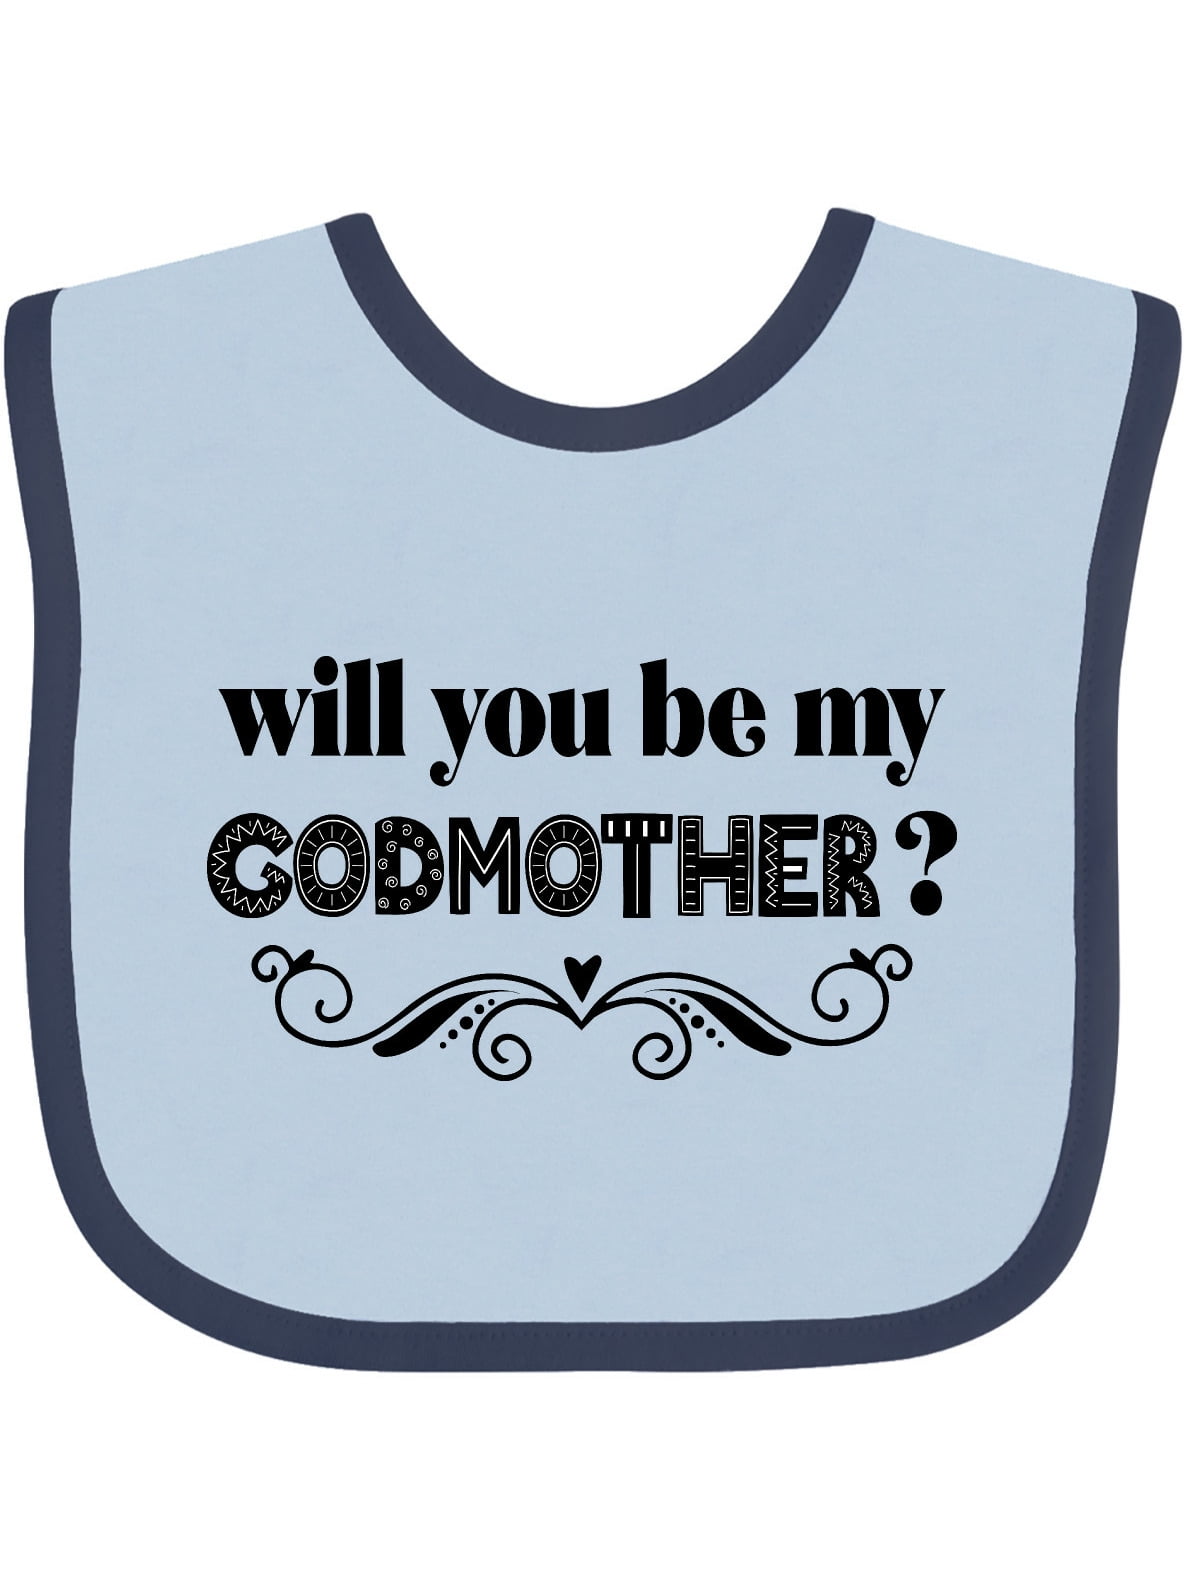 Will you be my Godmother Girls Boys Newborn Toddler Baby Bib 